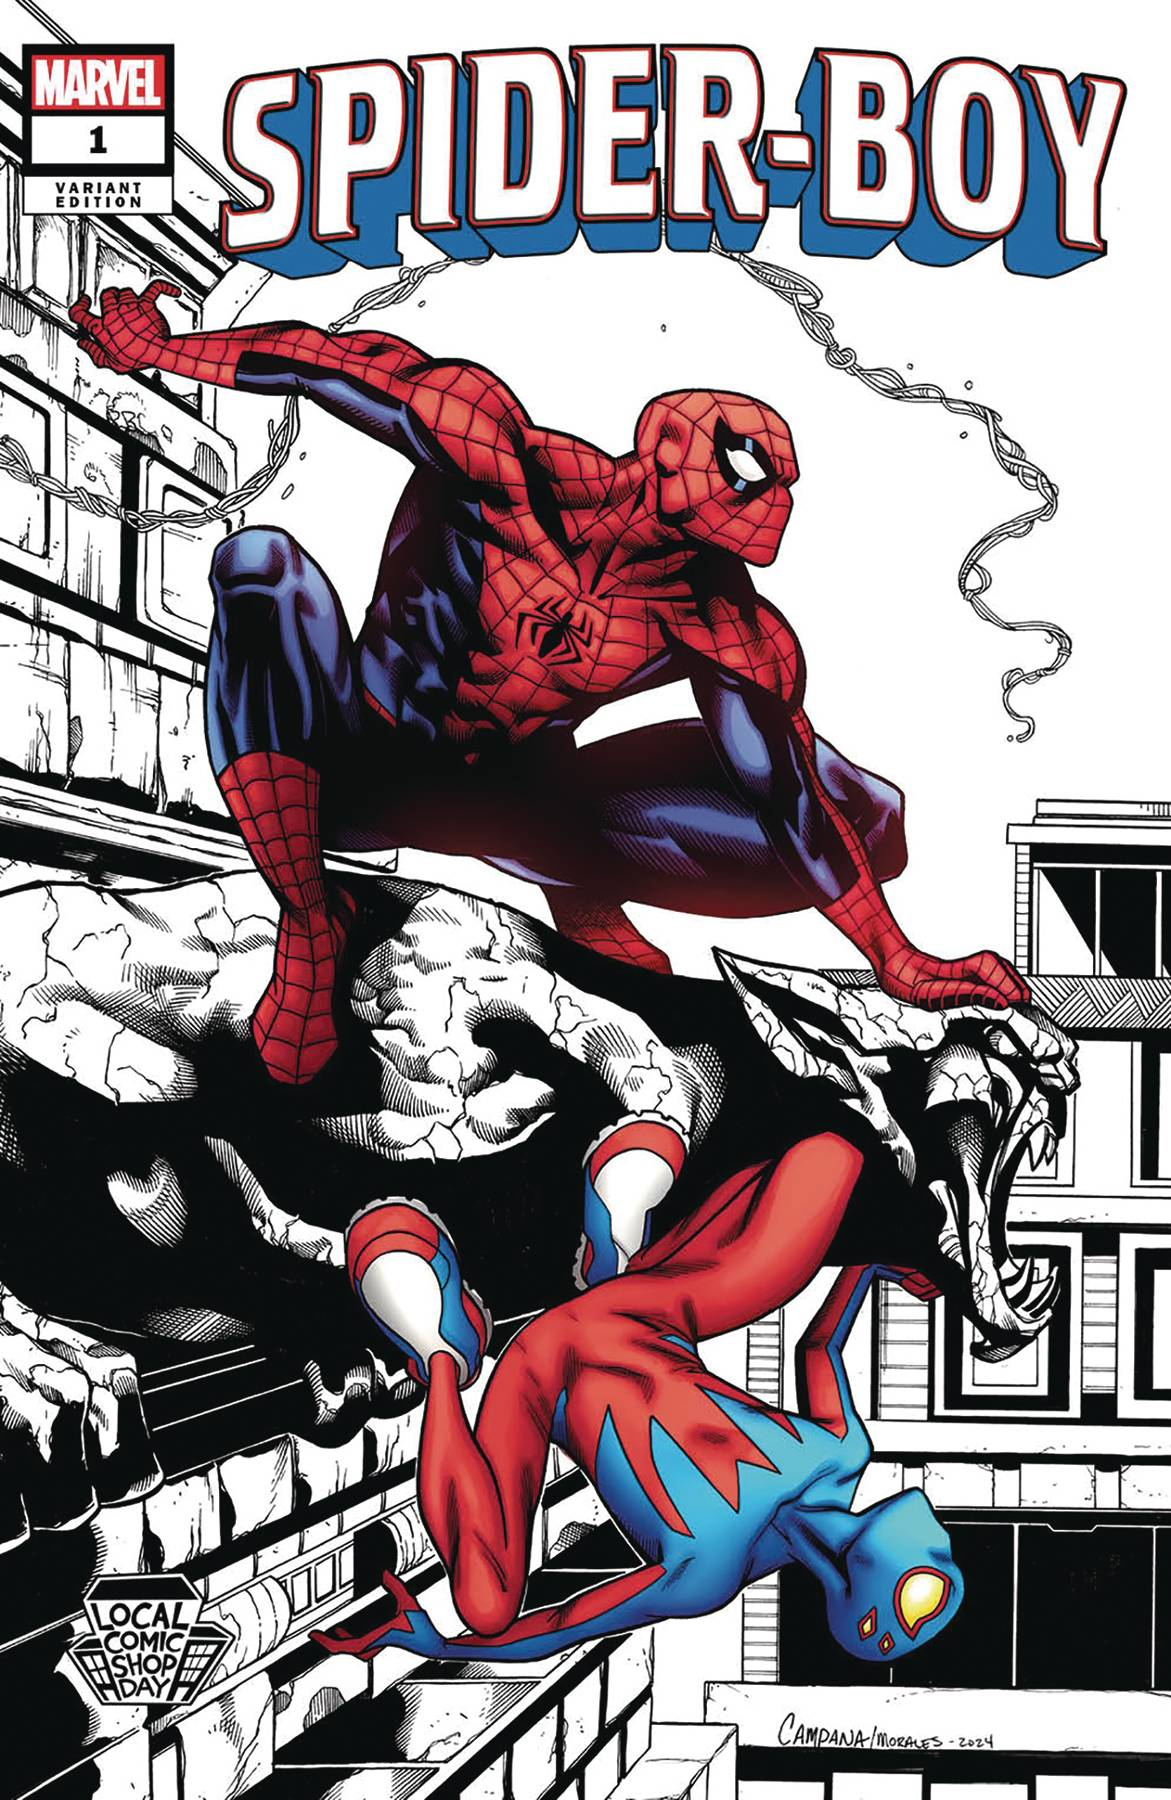 Spider-Boy #1 Local Comic Shop Day 2023 Chris Campana Variant